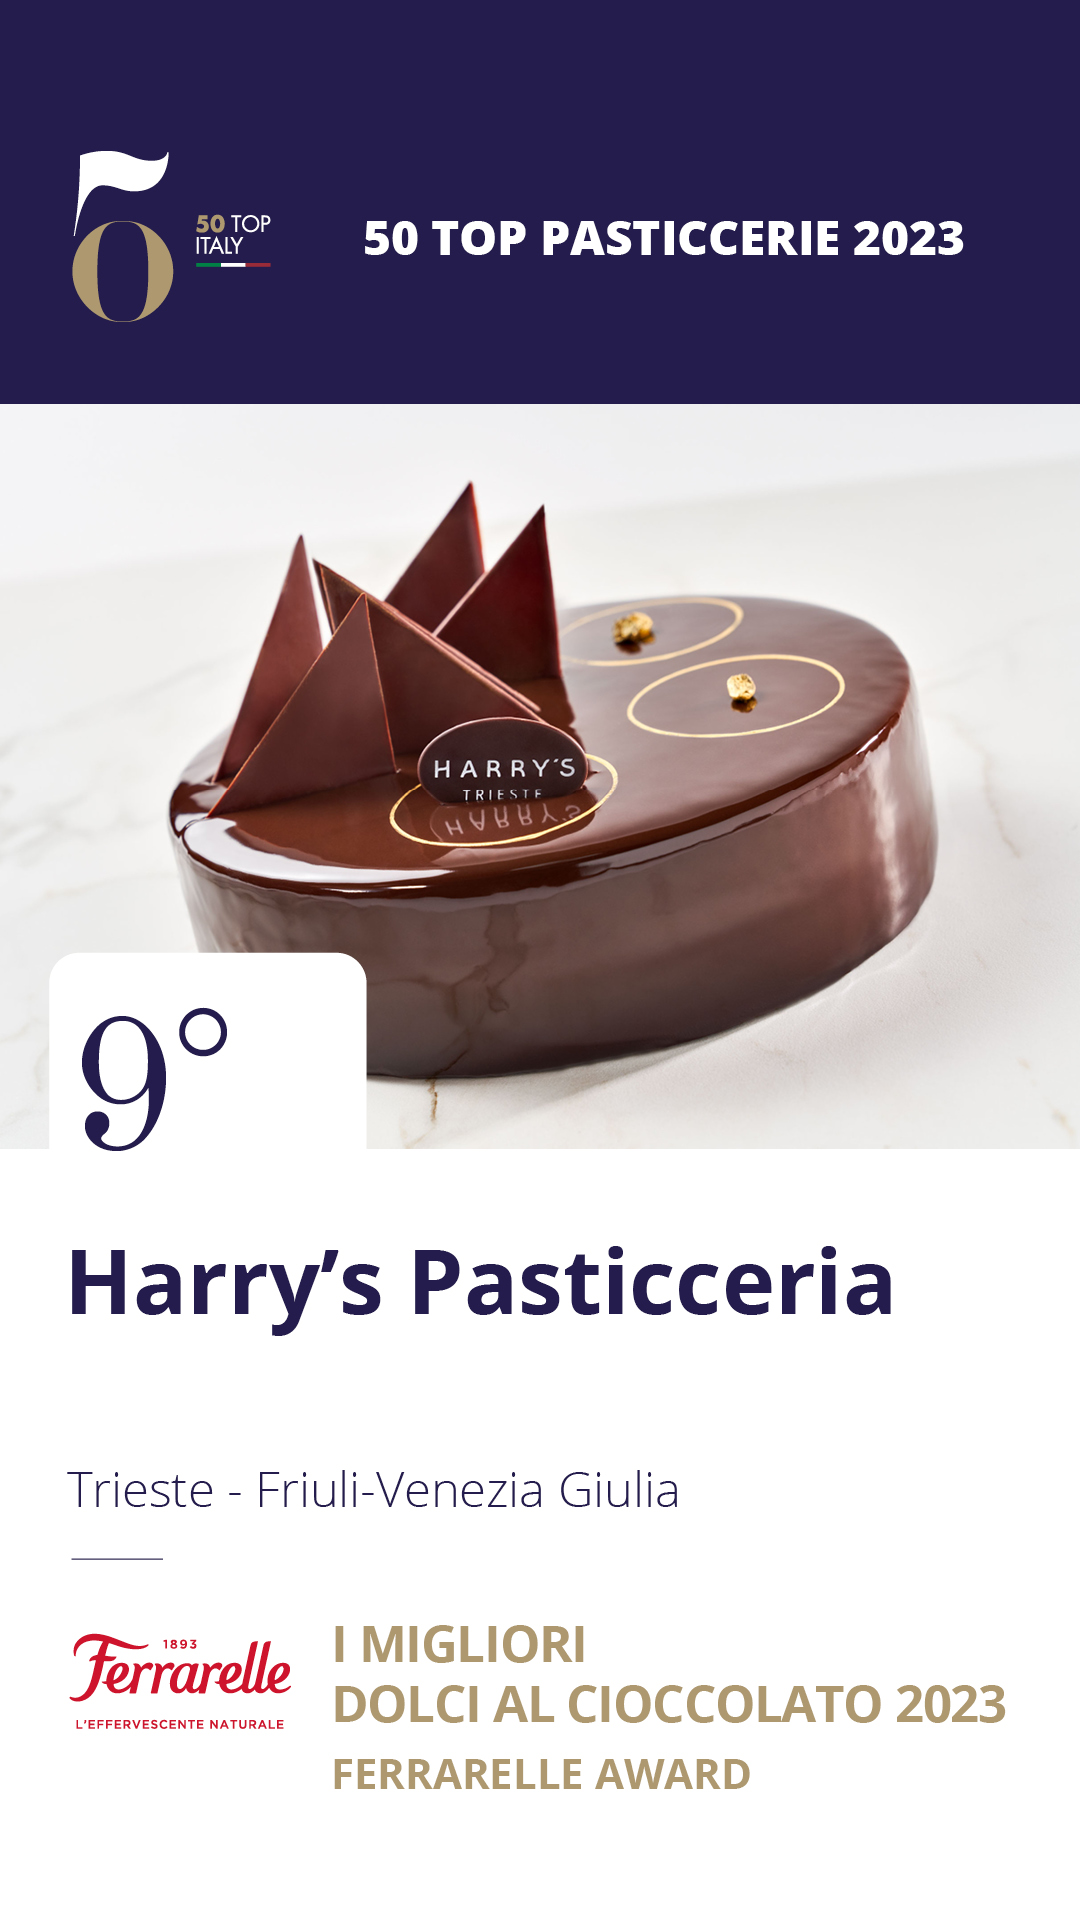 9. Harry’s Pasticceria – Trieste, Friuli-Venezia Giulia